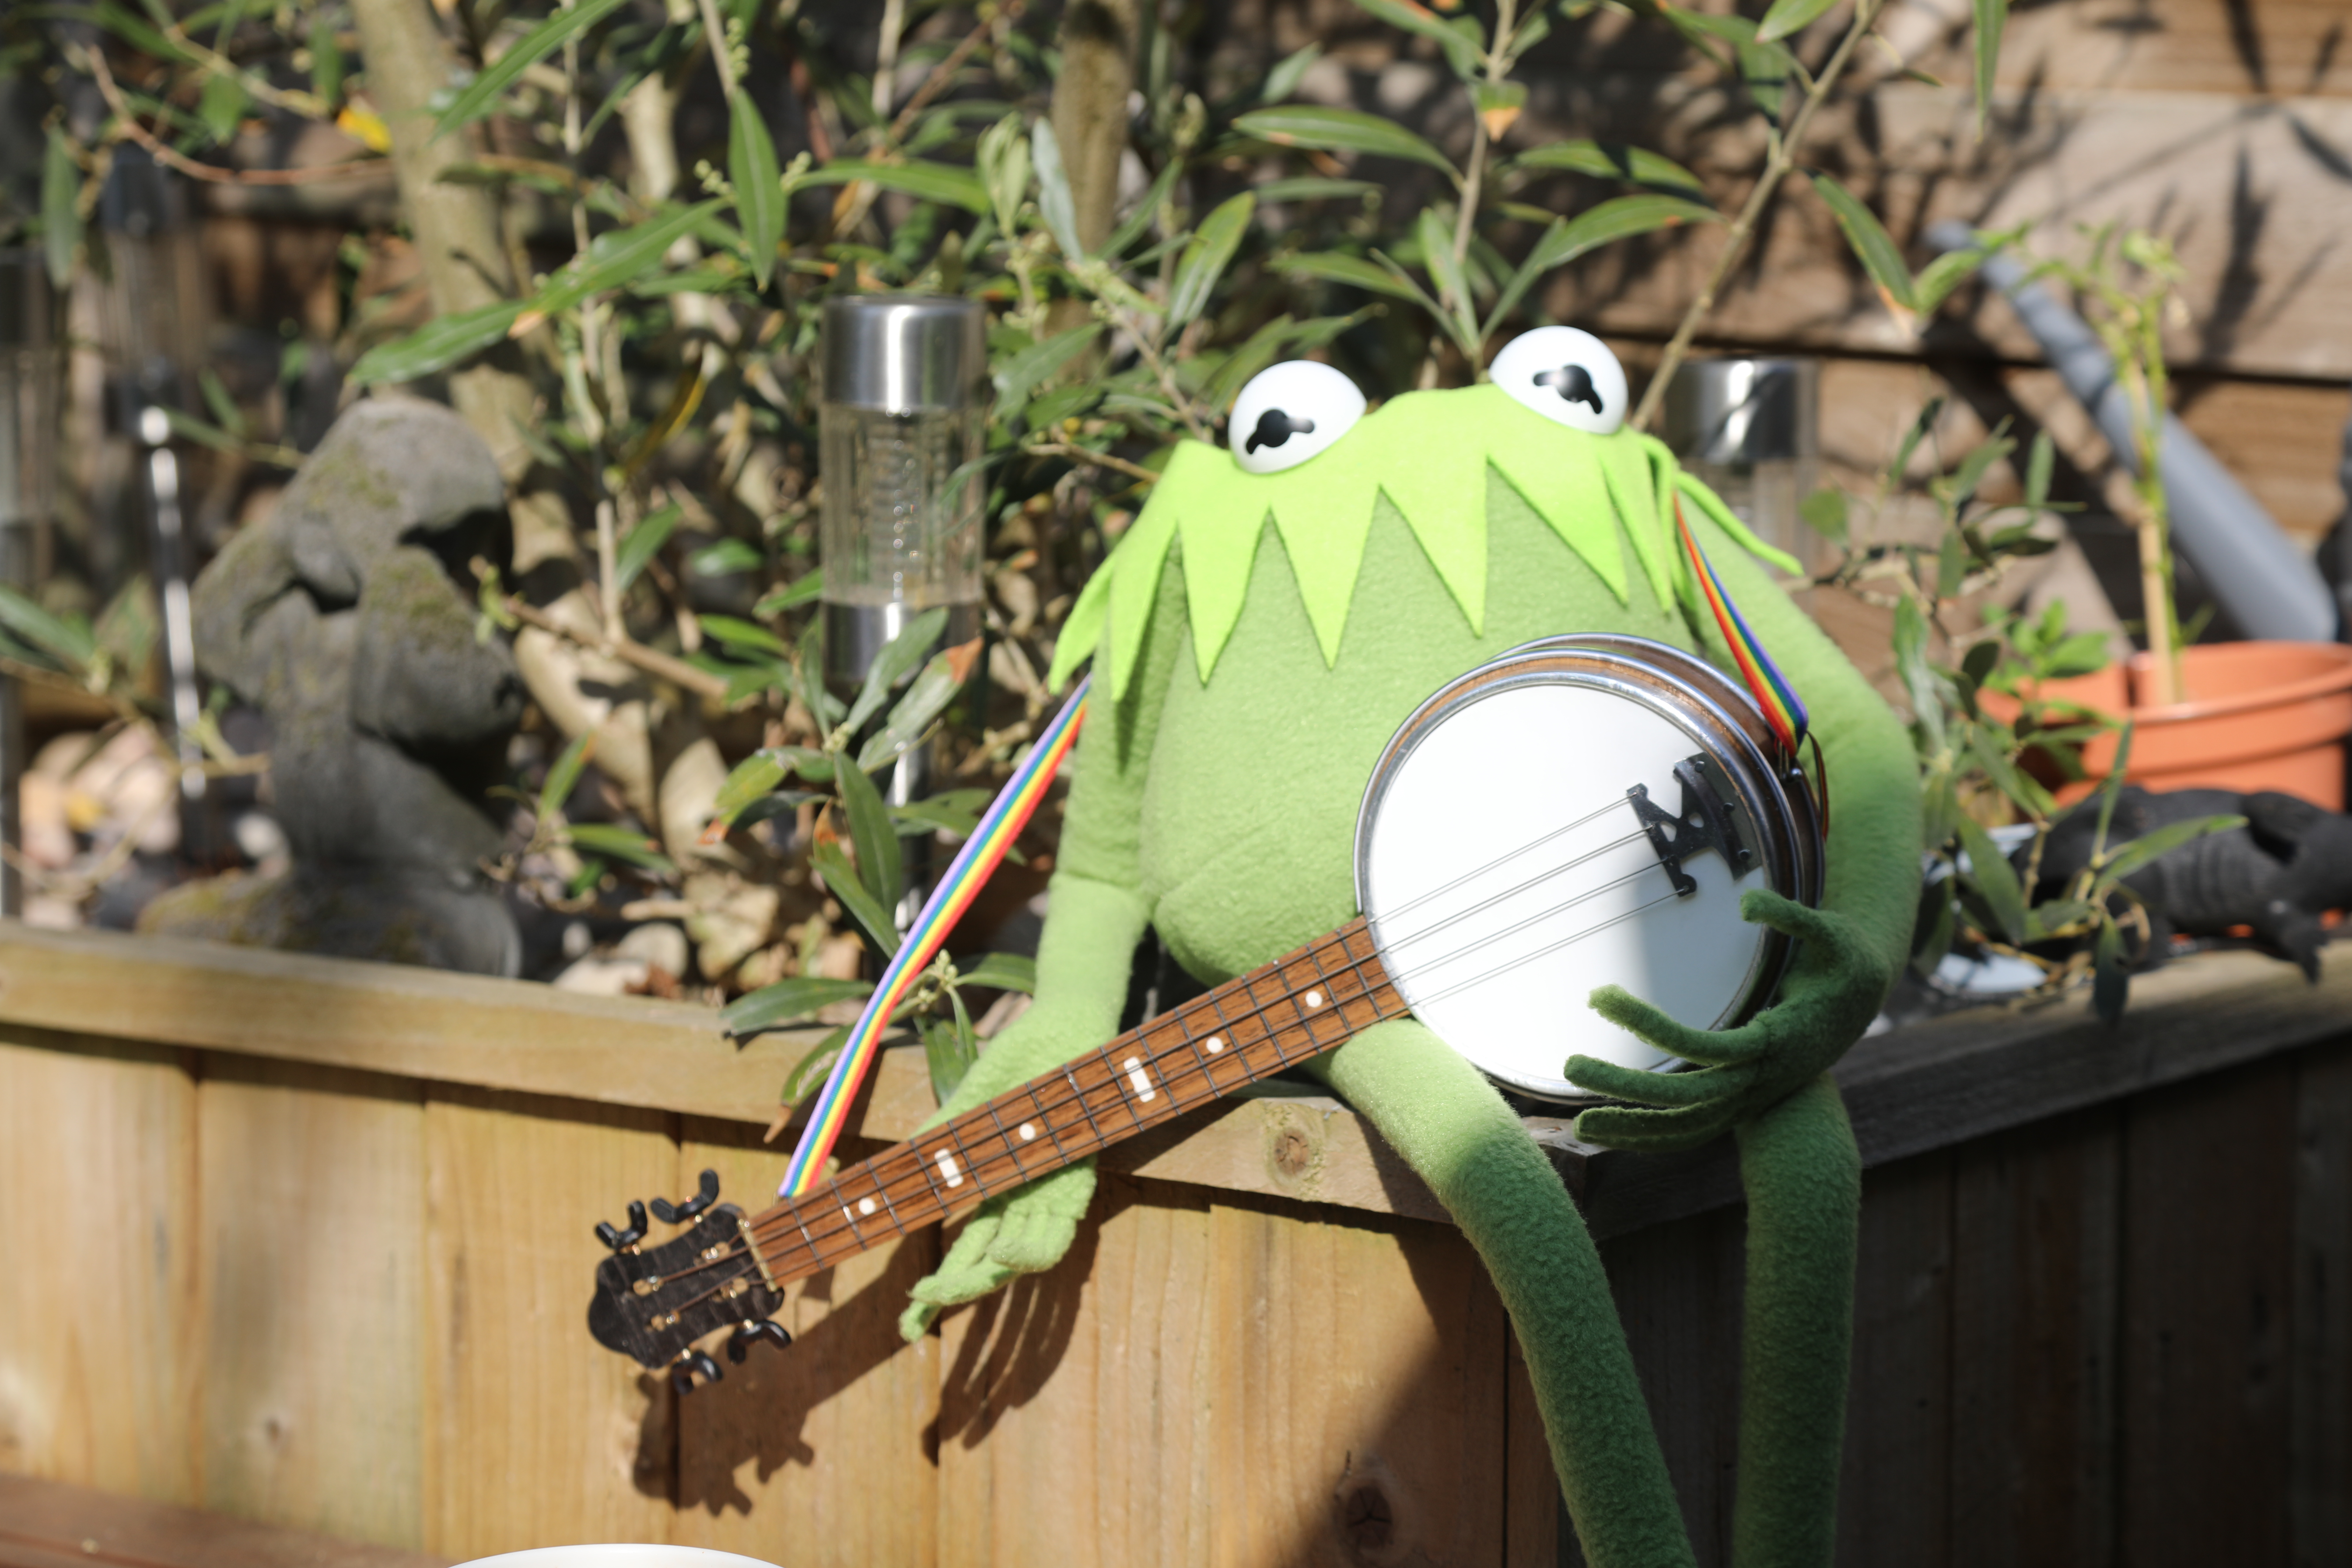 Muppet Movie Kermit's banjo | Page 2 | RPF Costume and Prop Maker Community